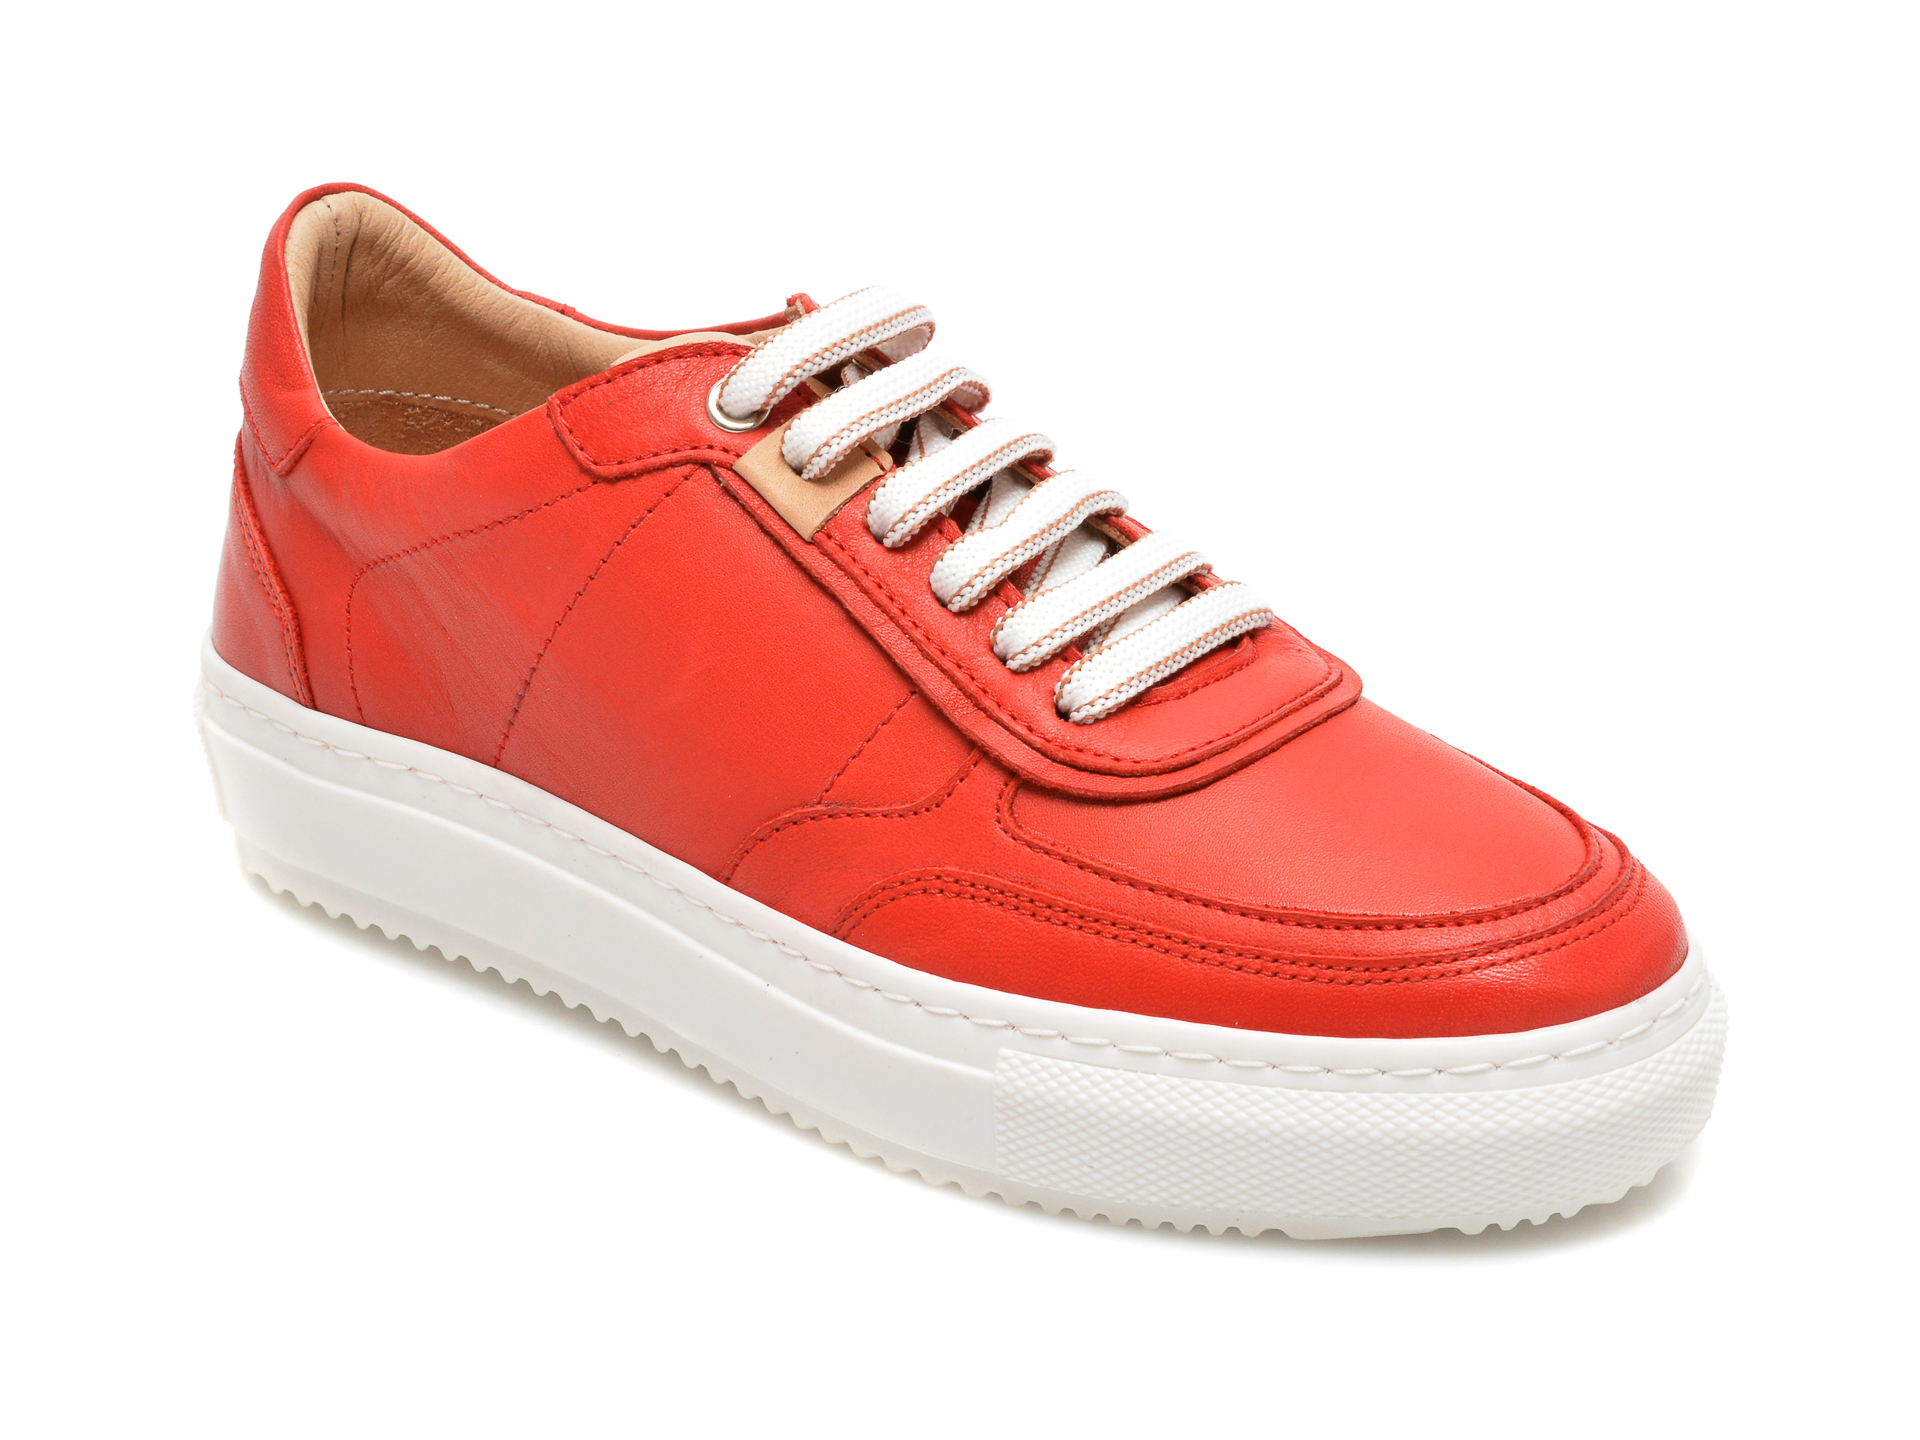 Pantofi FLAVIA PASSINI rosii, 62379, din piele naturala Flavia Passini INCALTAMINTE